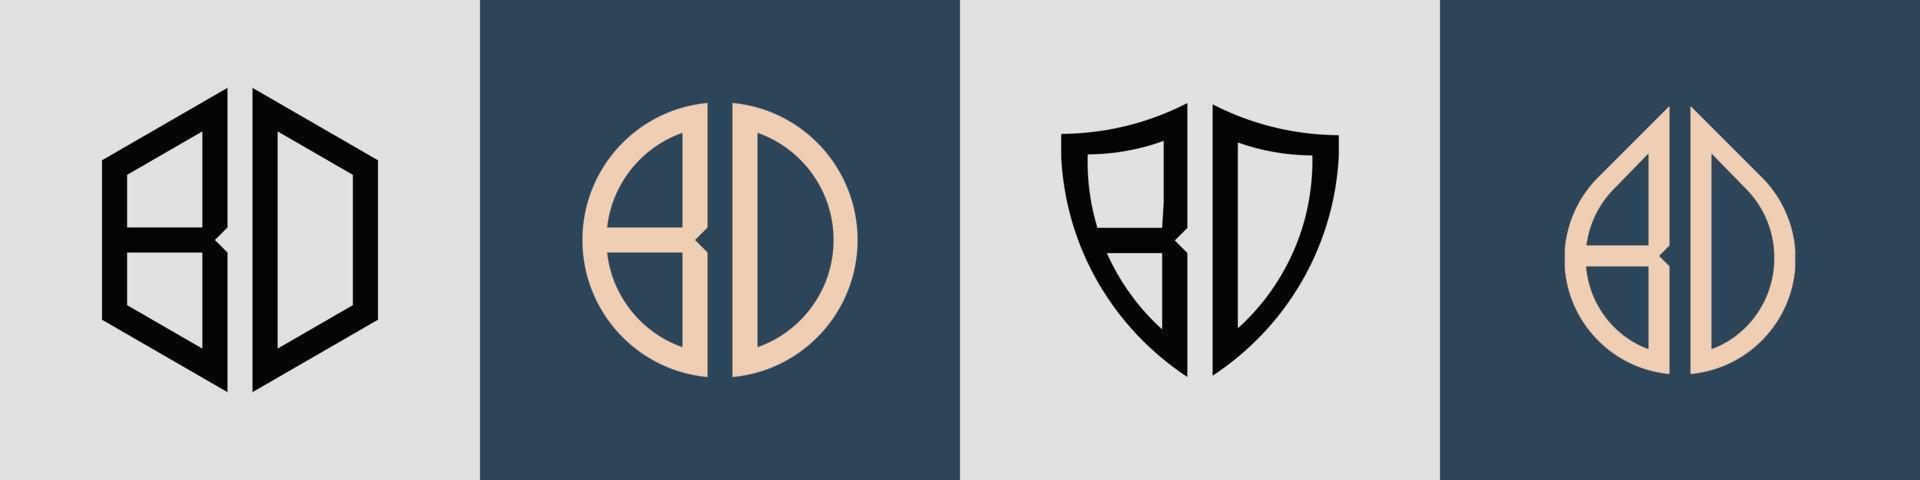 pacote de designs de logotipo bd de letras iniciais simples criativas. vetor